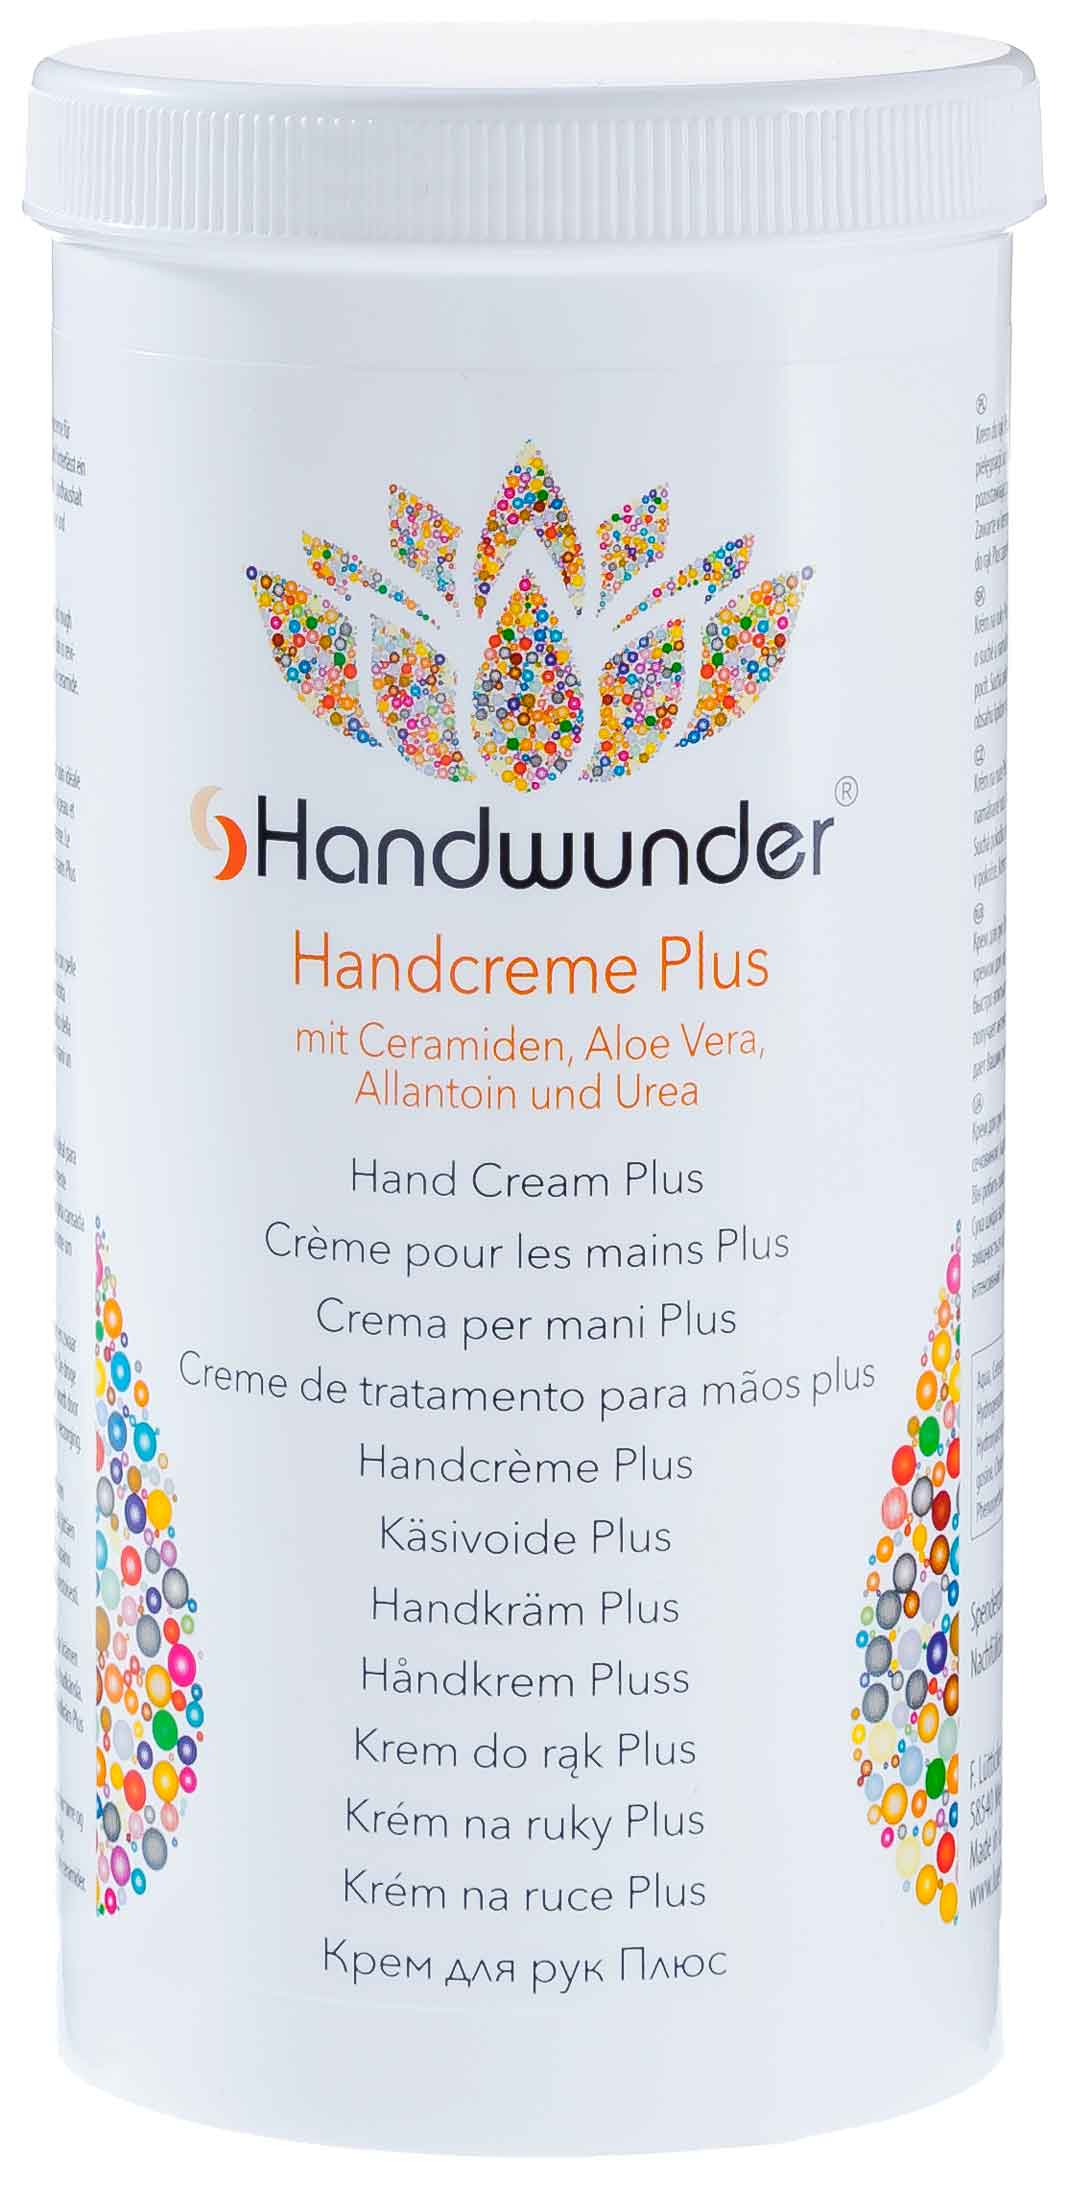 Handwunder Handcreme Plus 450 ml Refill